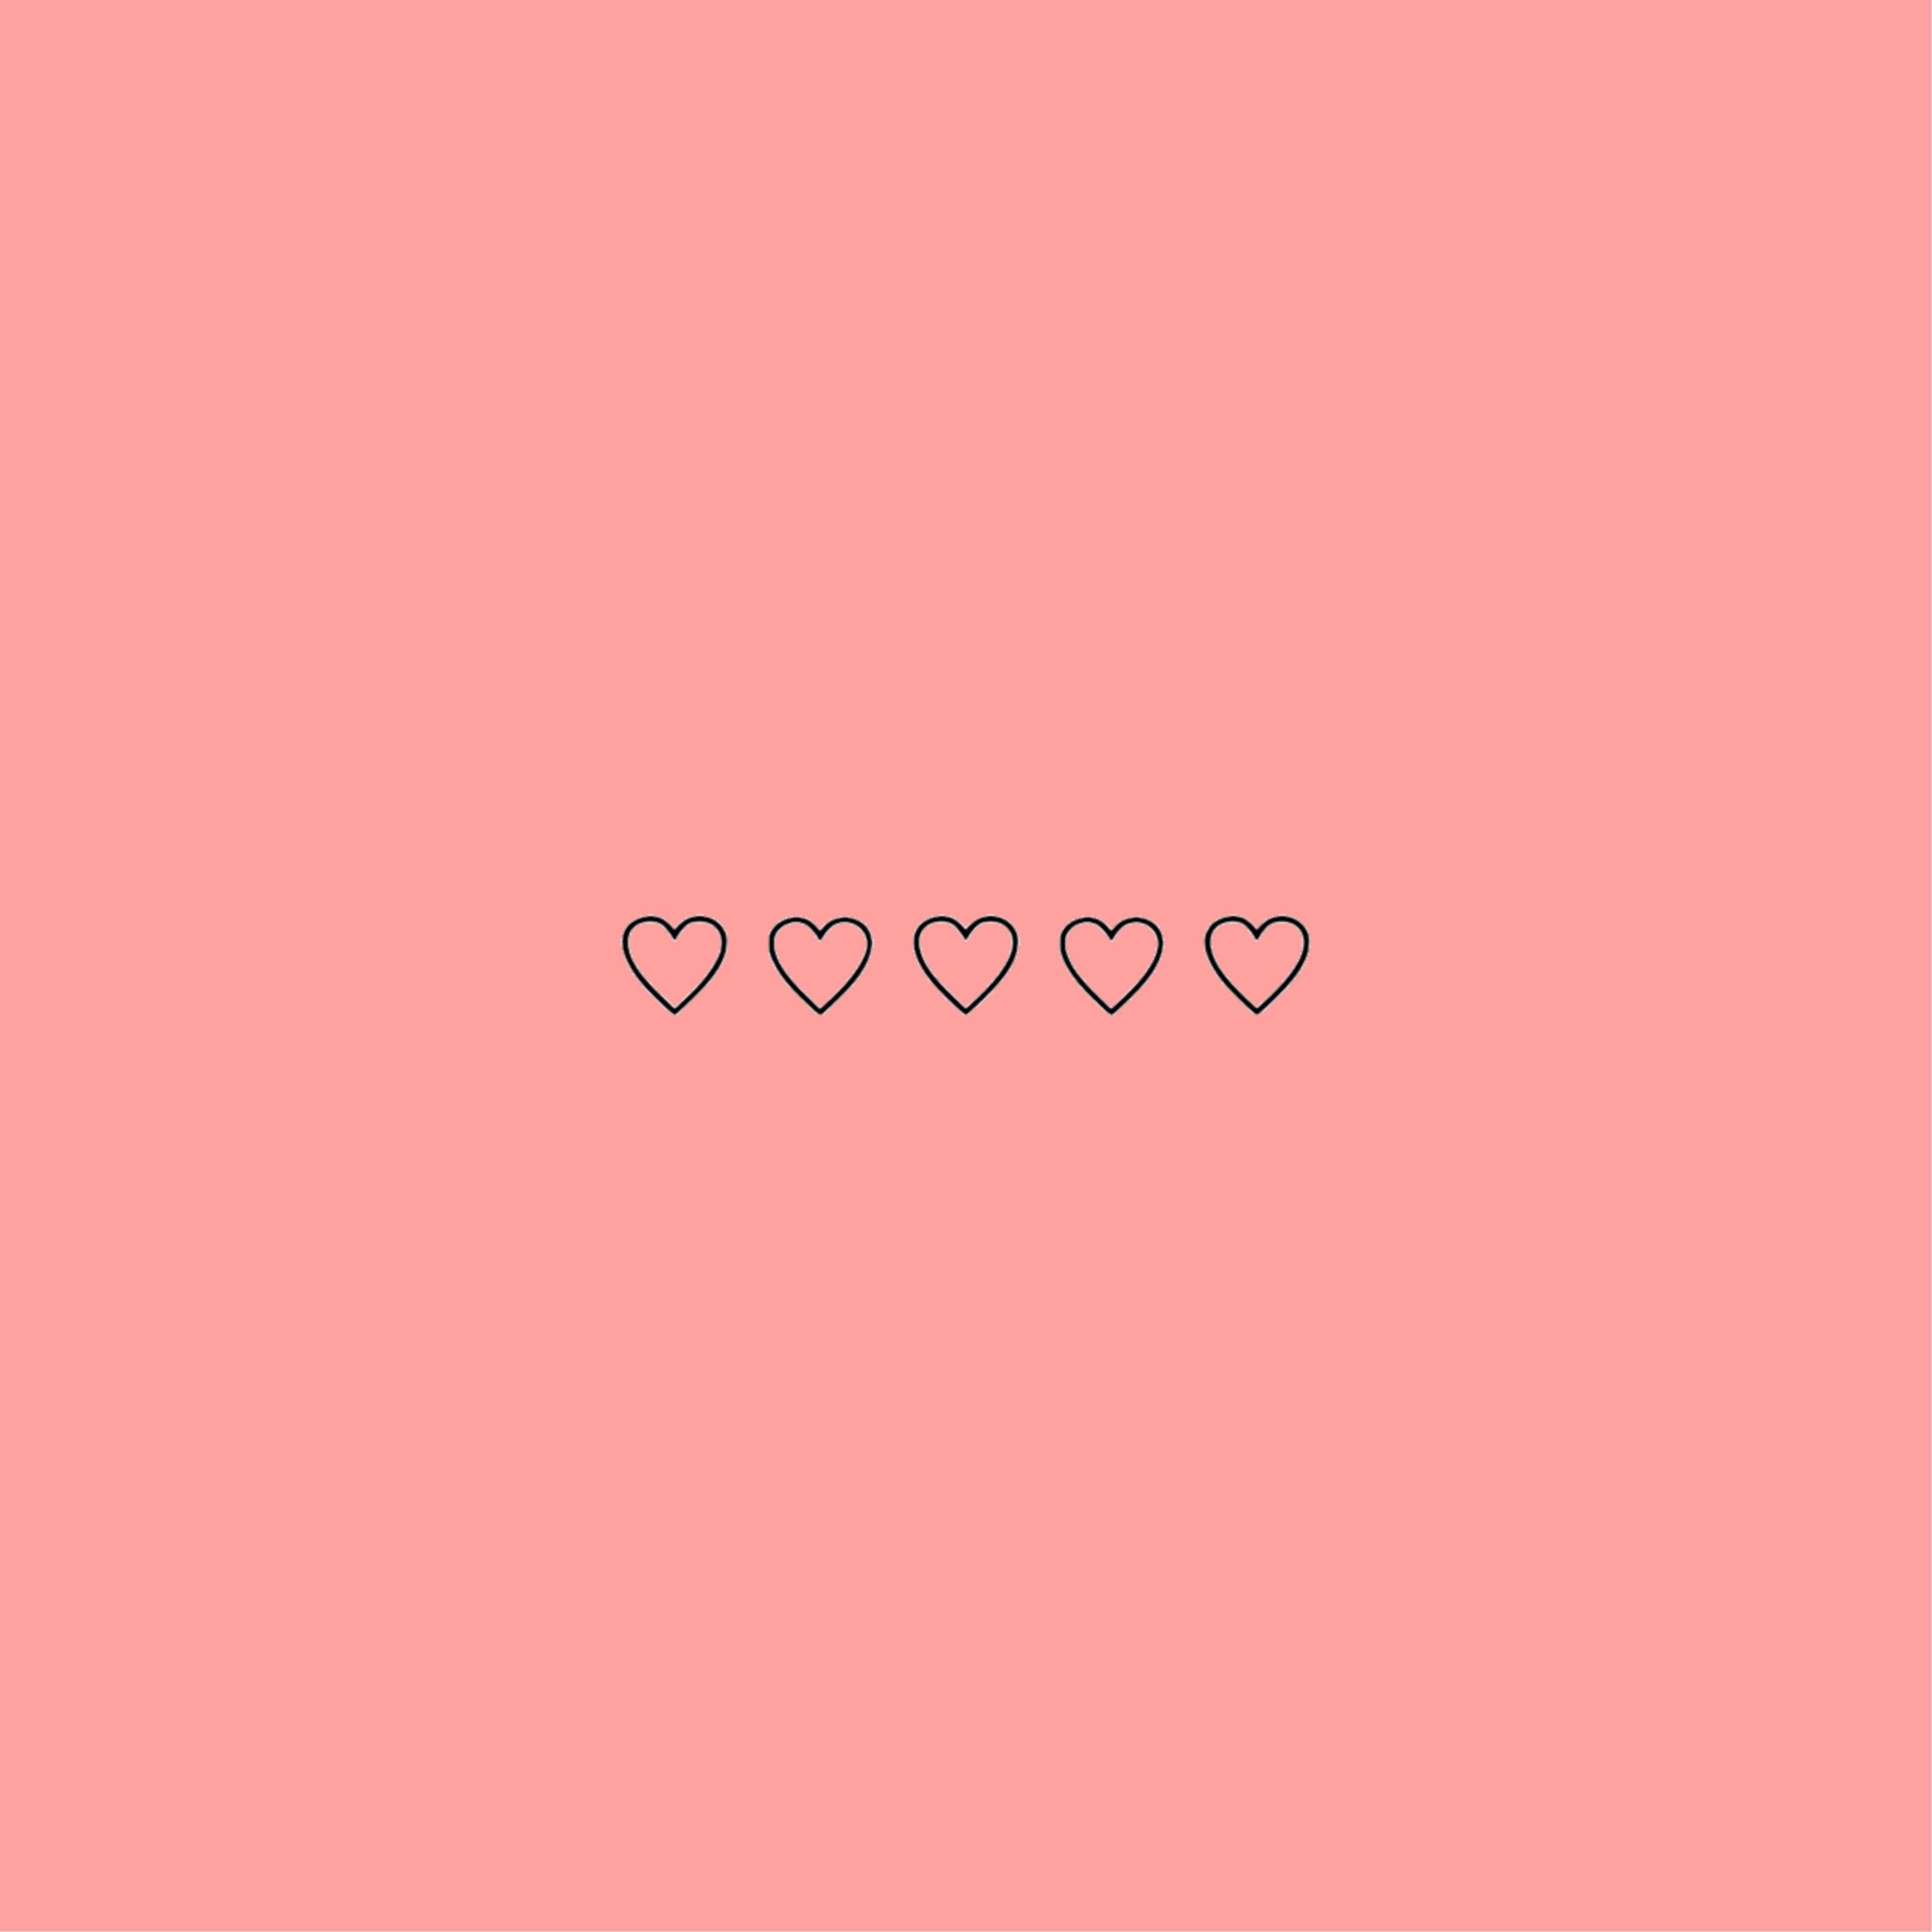 Download Minimalist Pastel Pink Heart Aesthetic Wallpaper